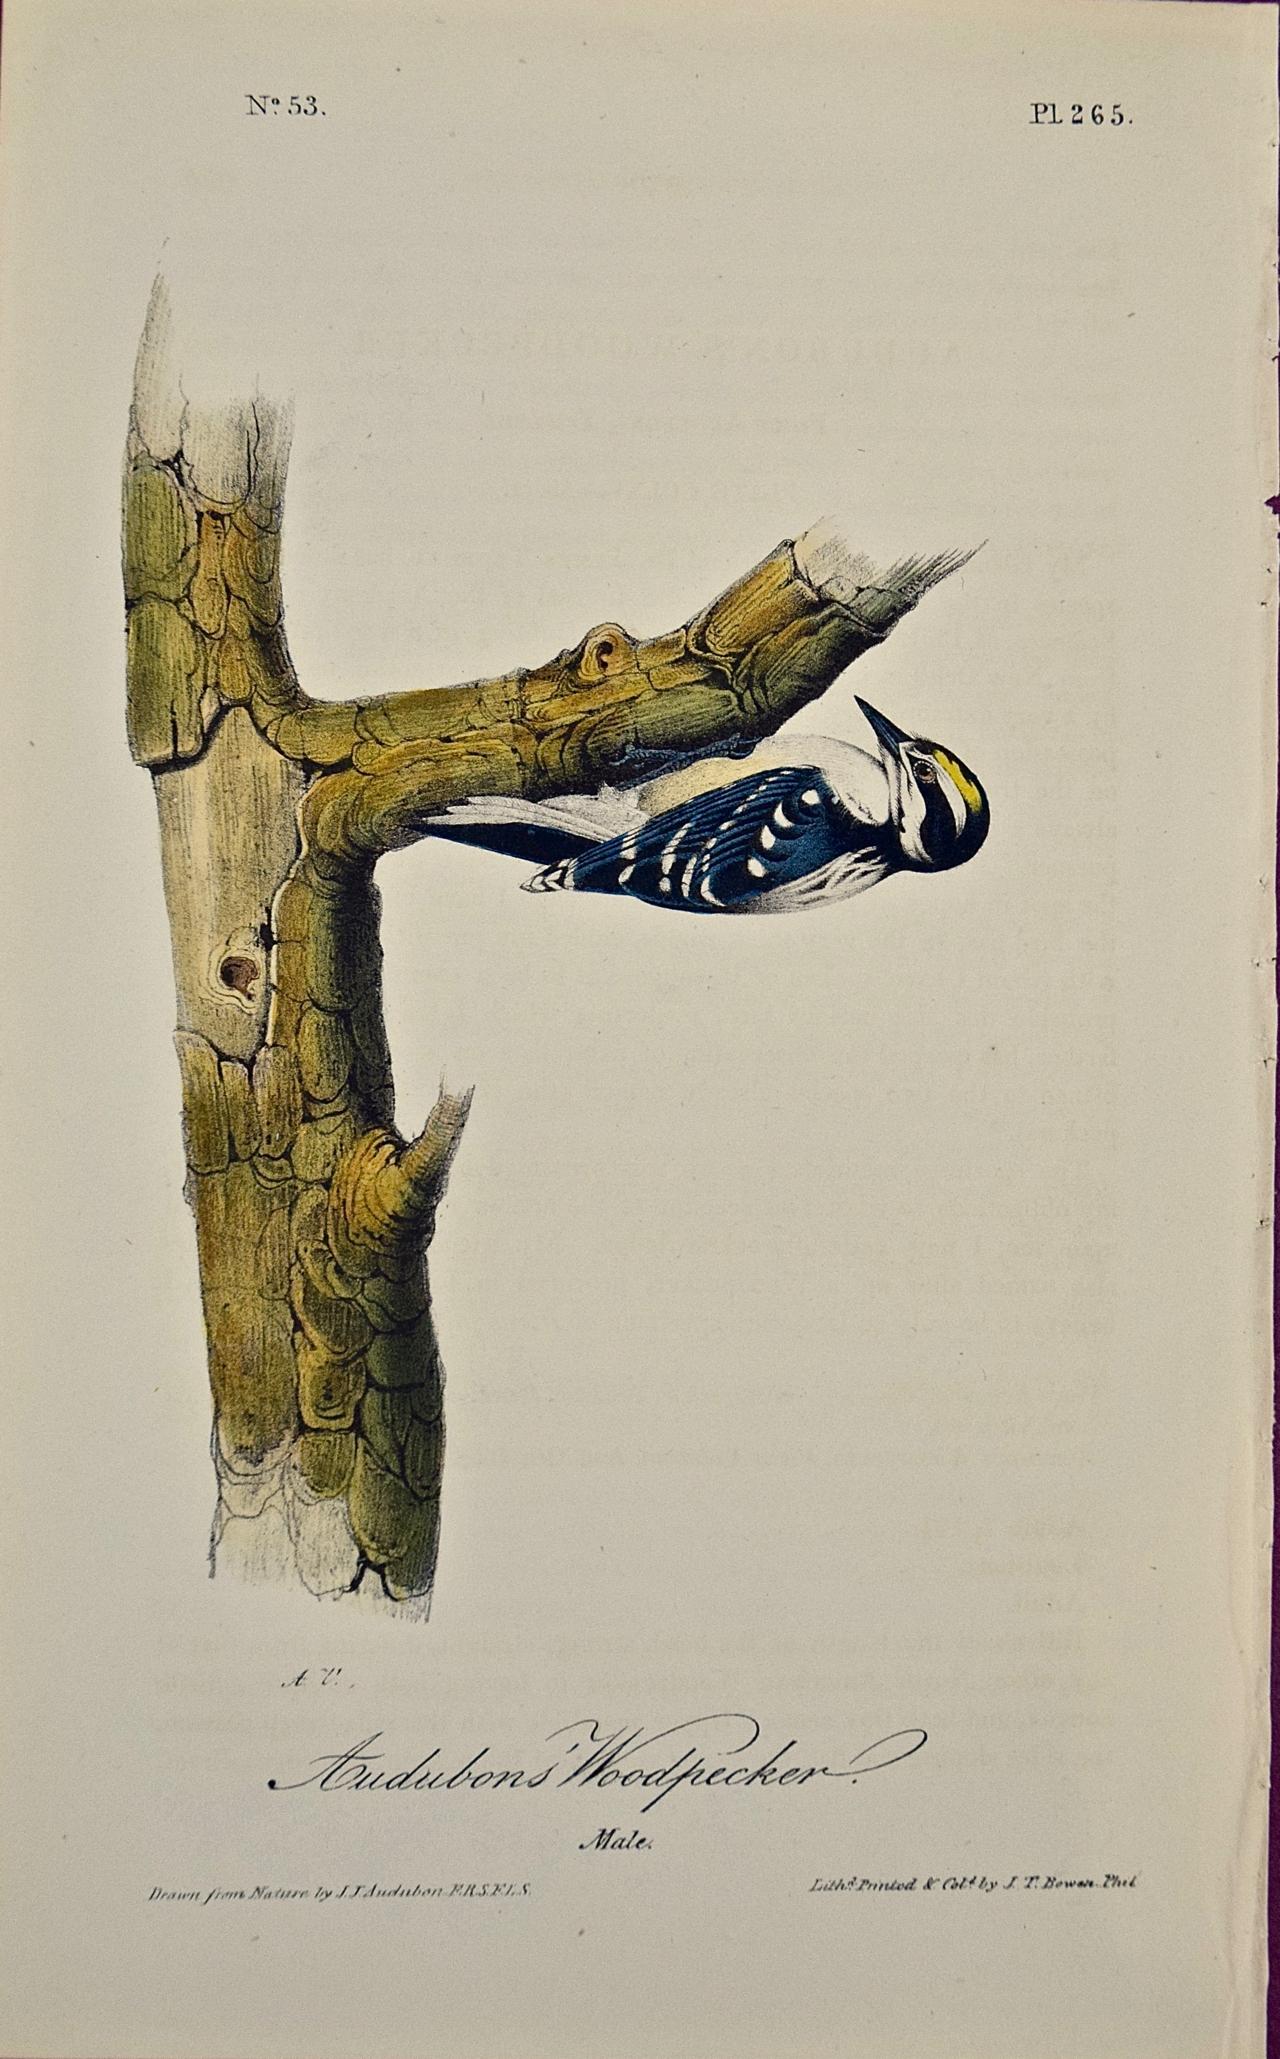 John James Audubon Animal Print - "Audubons' Woodpecker" Original First Edition Audubon Hand Colored Lithograph 